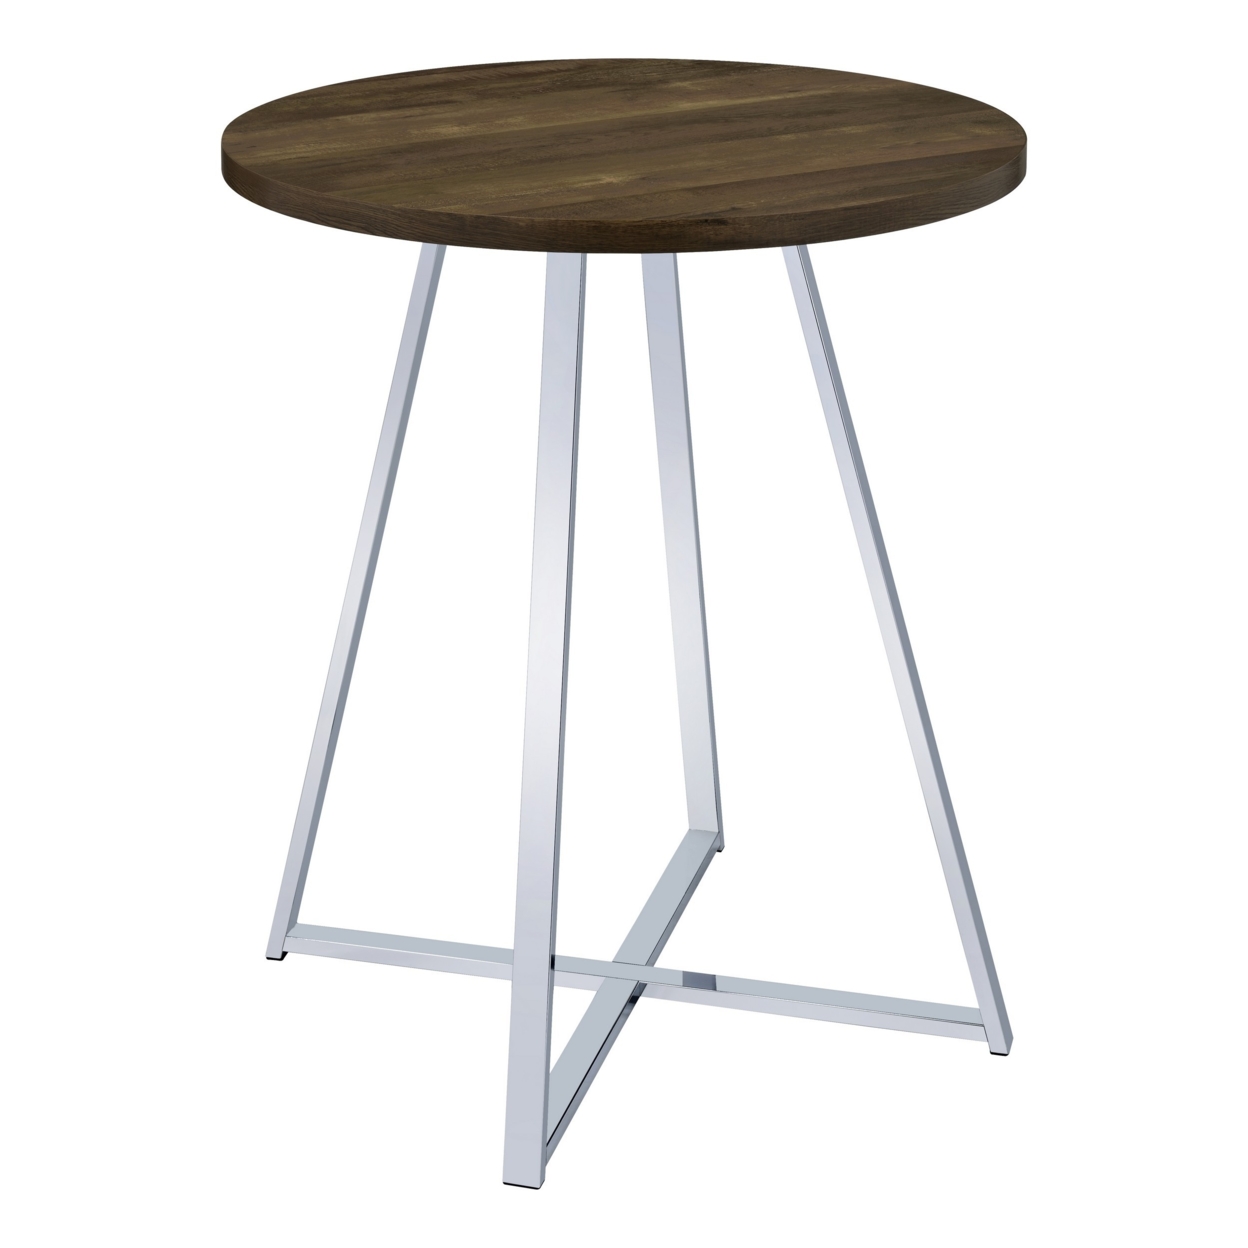 43 Inch Tall Modern Bar Table, Brown Round Top, Polished Chrome Flared Legs- Saltoro Sherpi